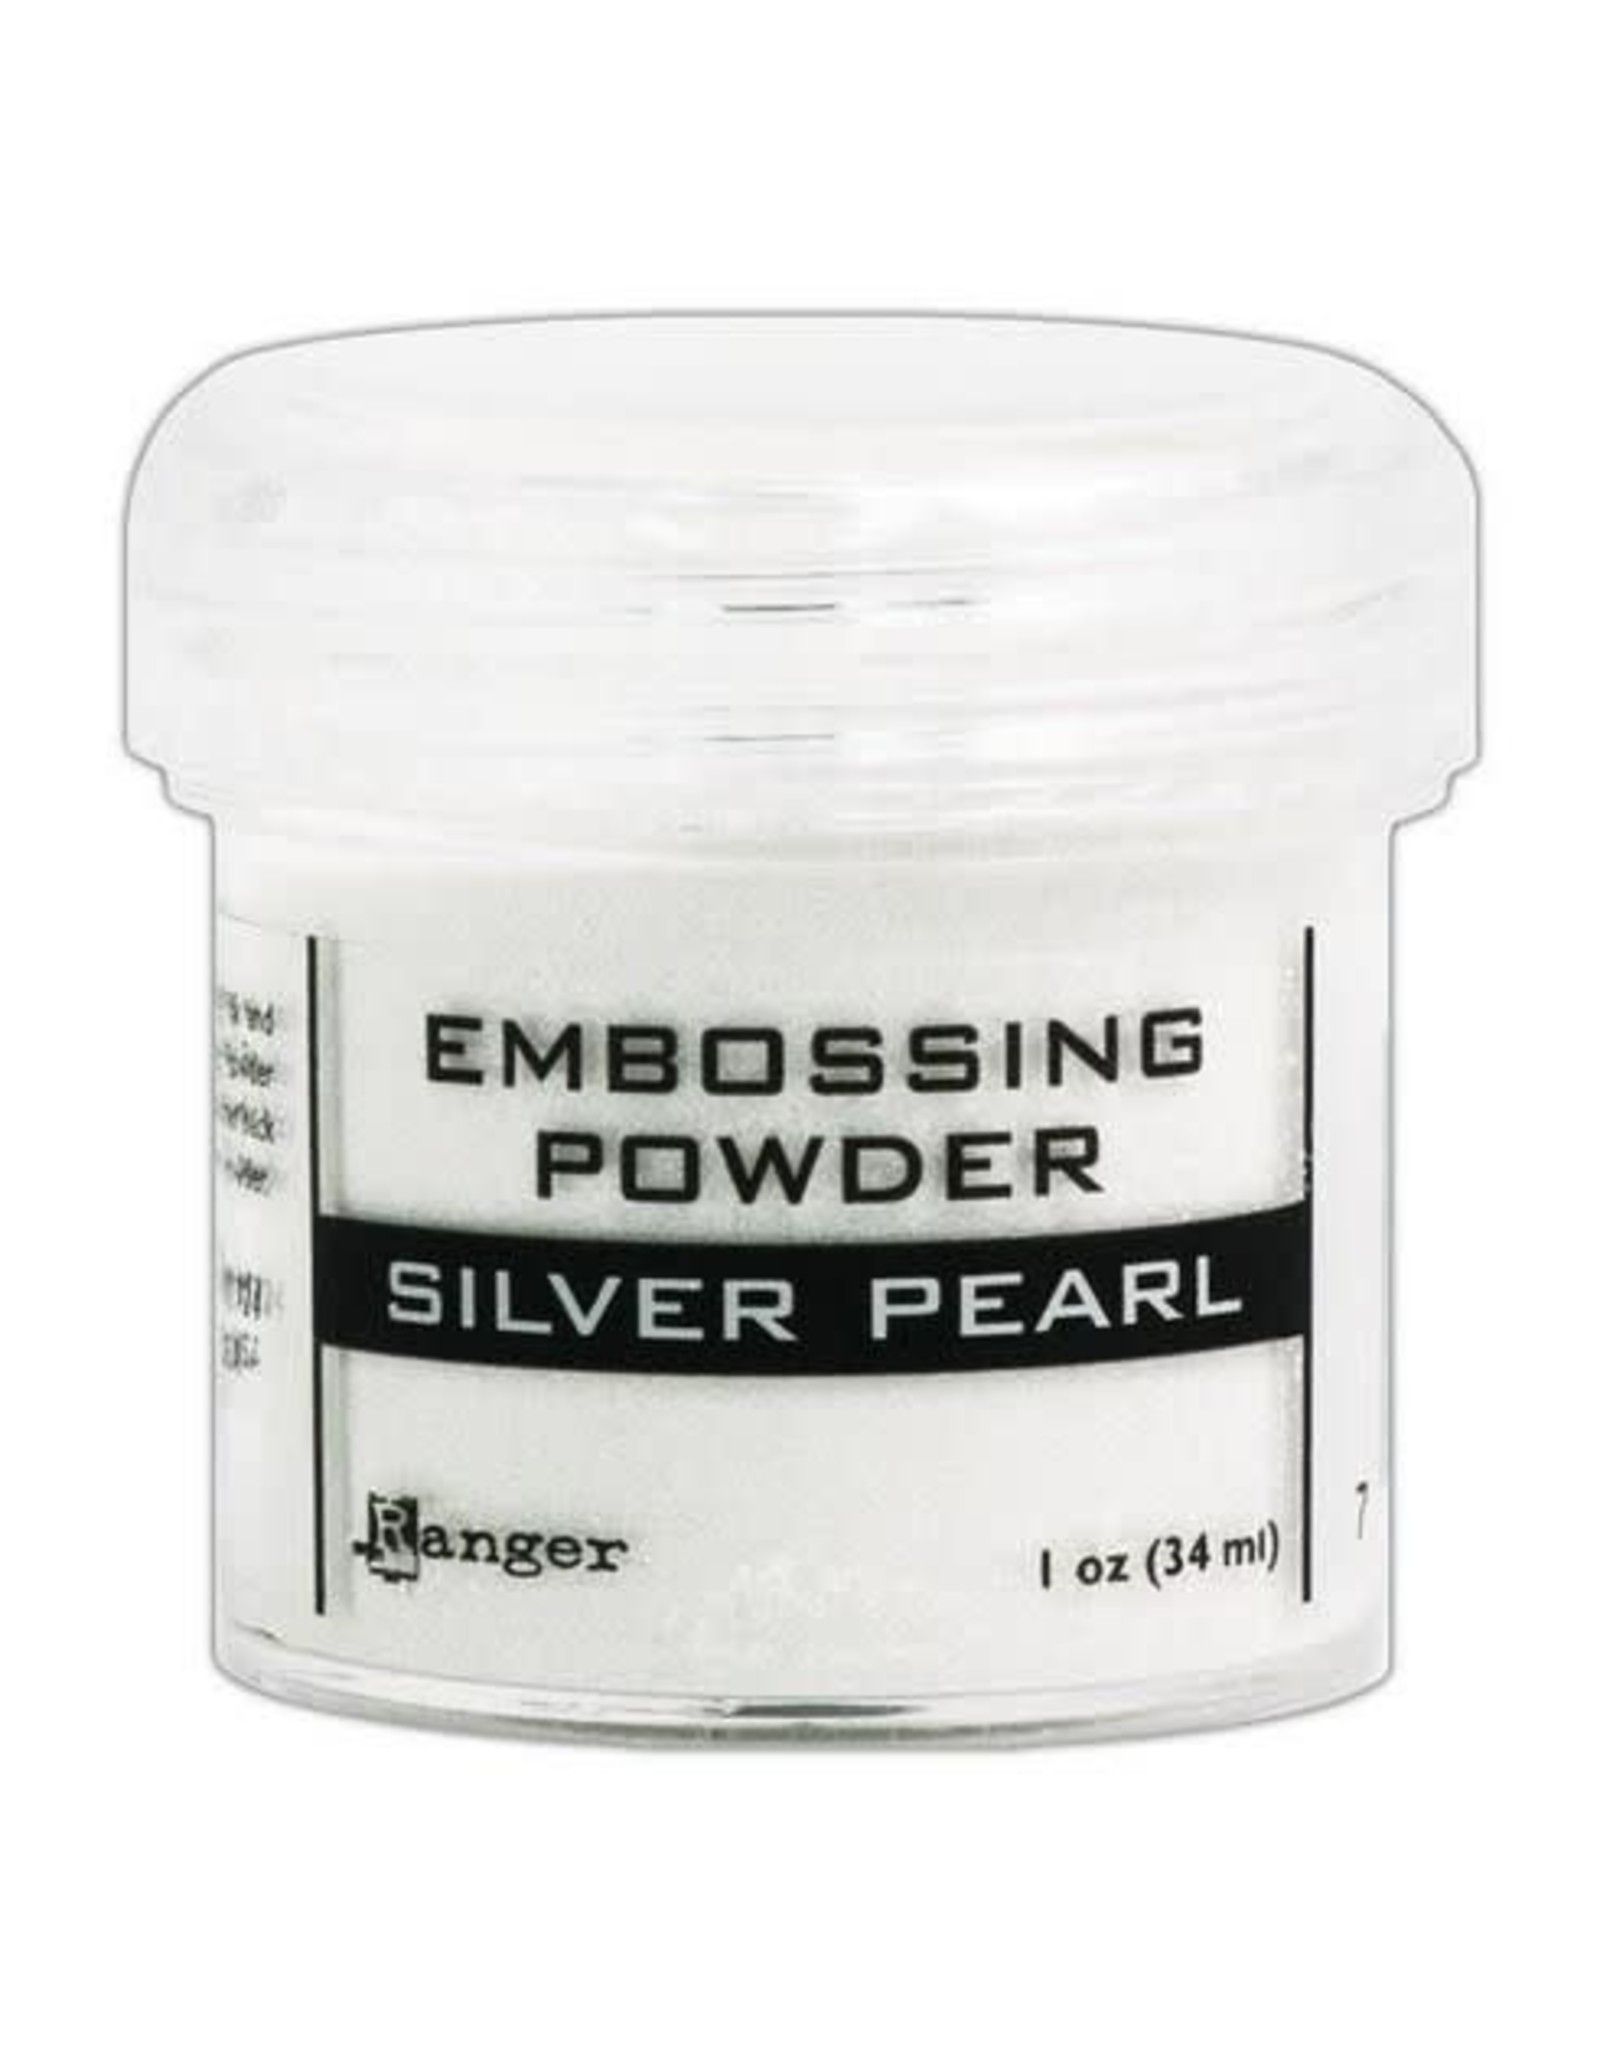 Ranger embossingpoeder Silver pearl